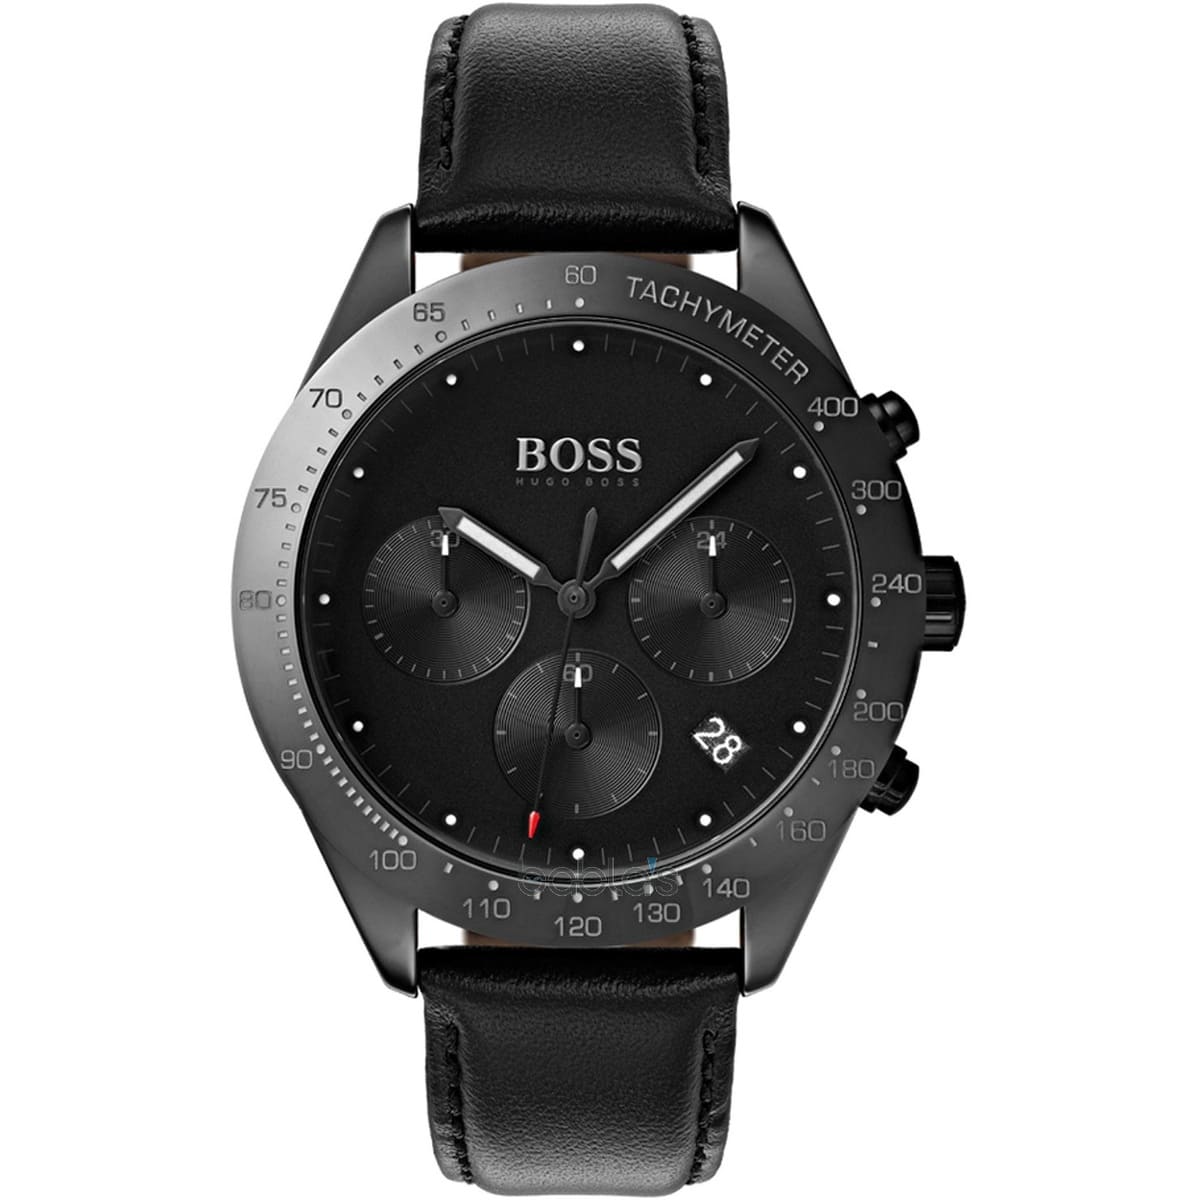 Наручные часы hugo. Hugo Boss - HB 1513581. Часы Хьюго босс мужские. Часы Boss 1513581. Часы Hugo Boss мужские черные.